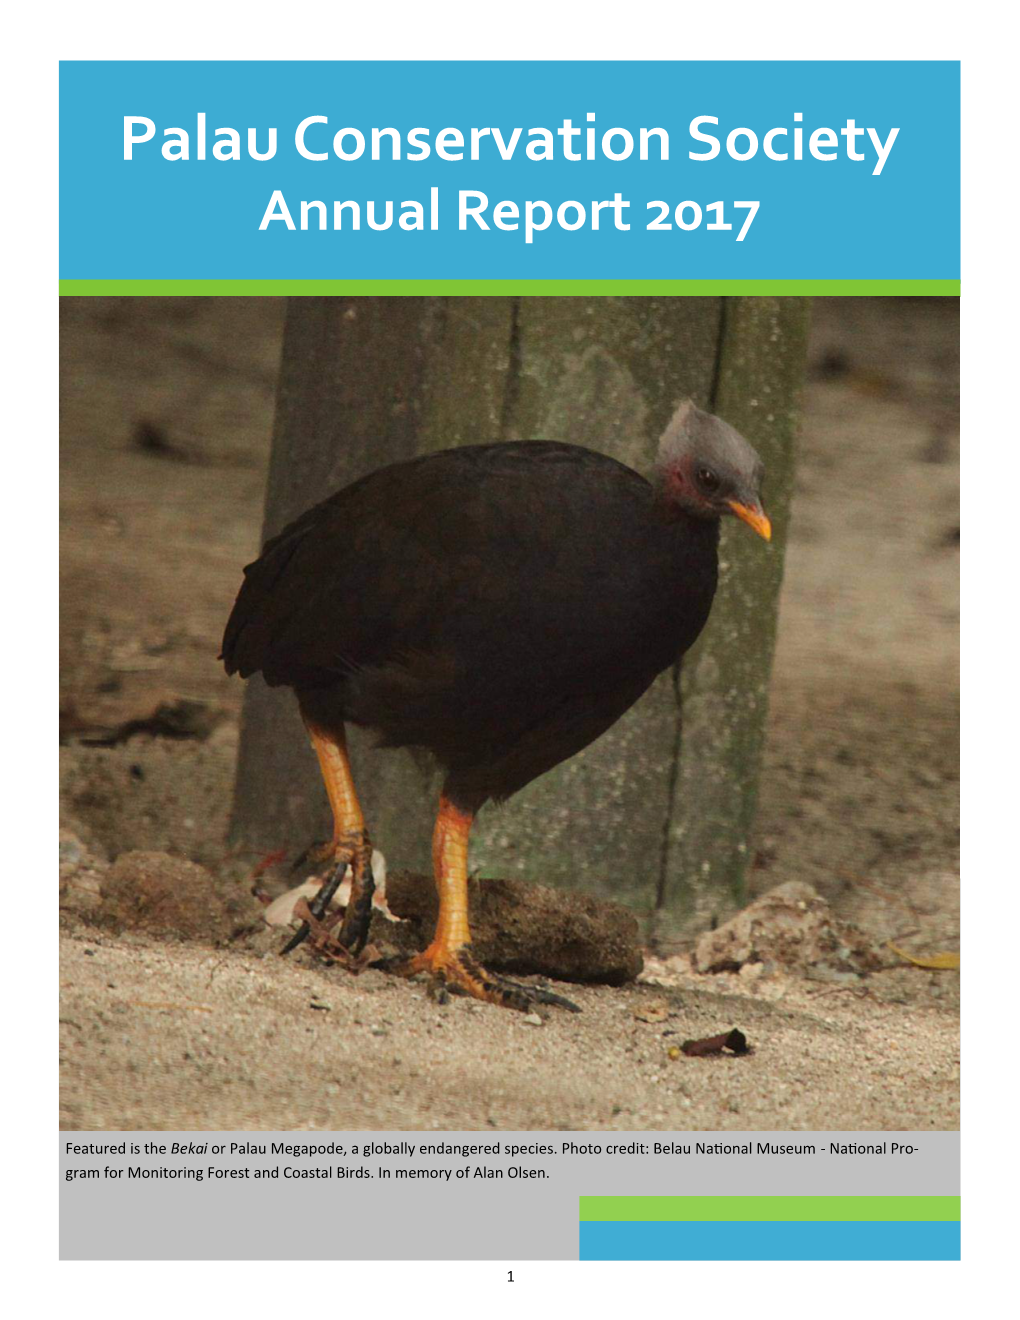 PCS 2017 Annual Report